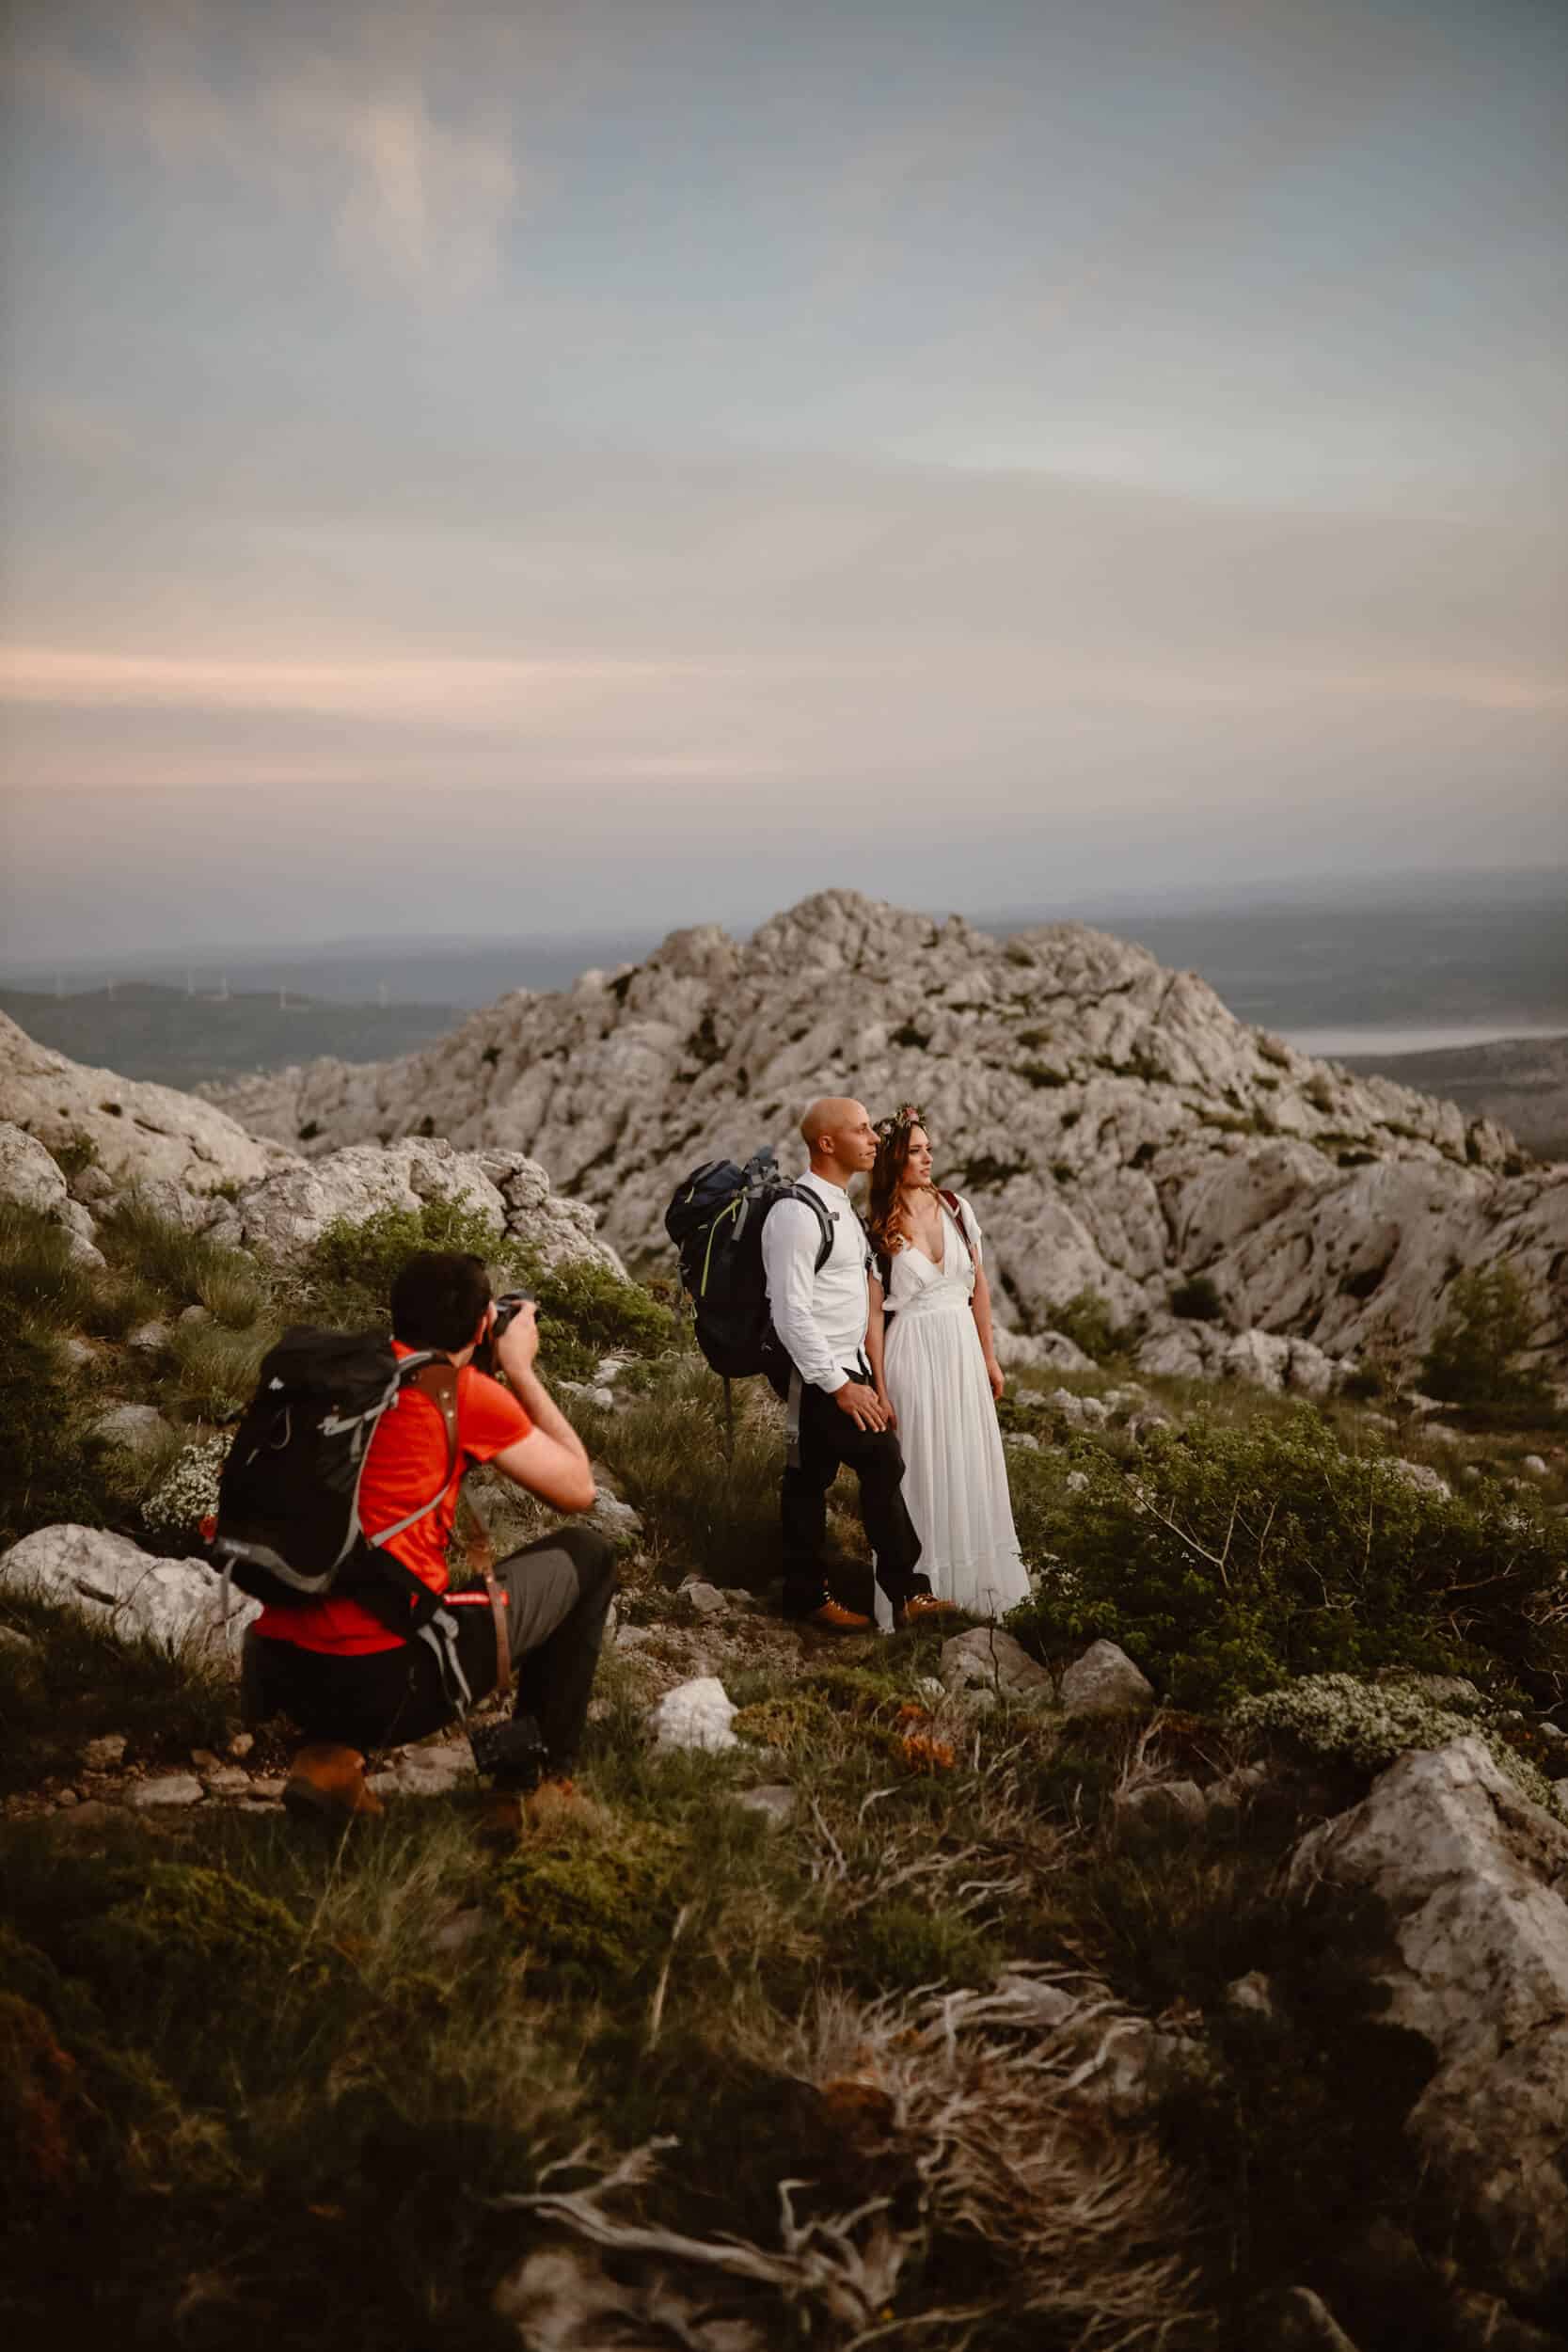 Adventure elopement photographer Love and Ventures 30 | Croatia Elopement Photographer and Videographer